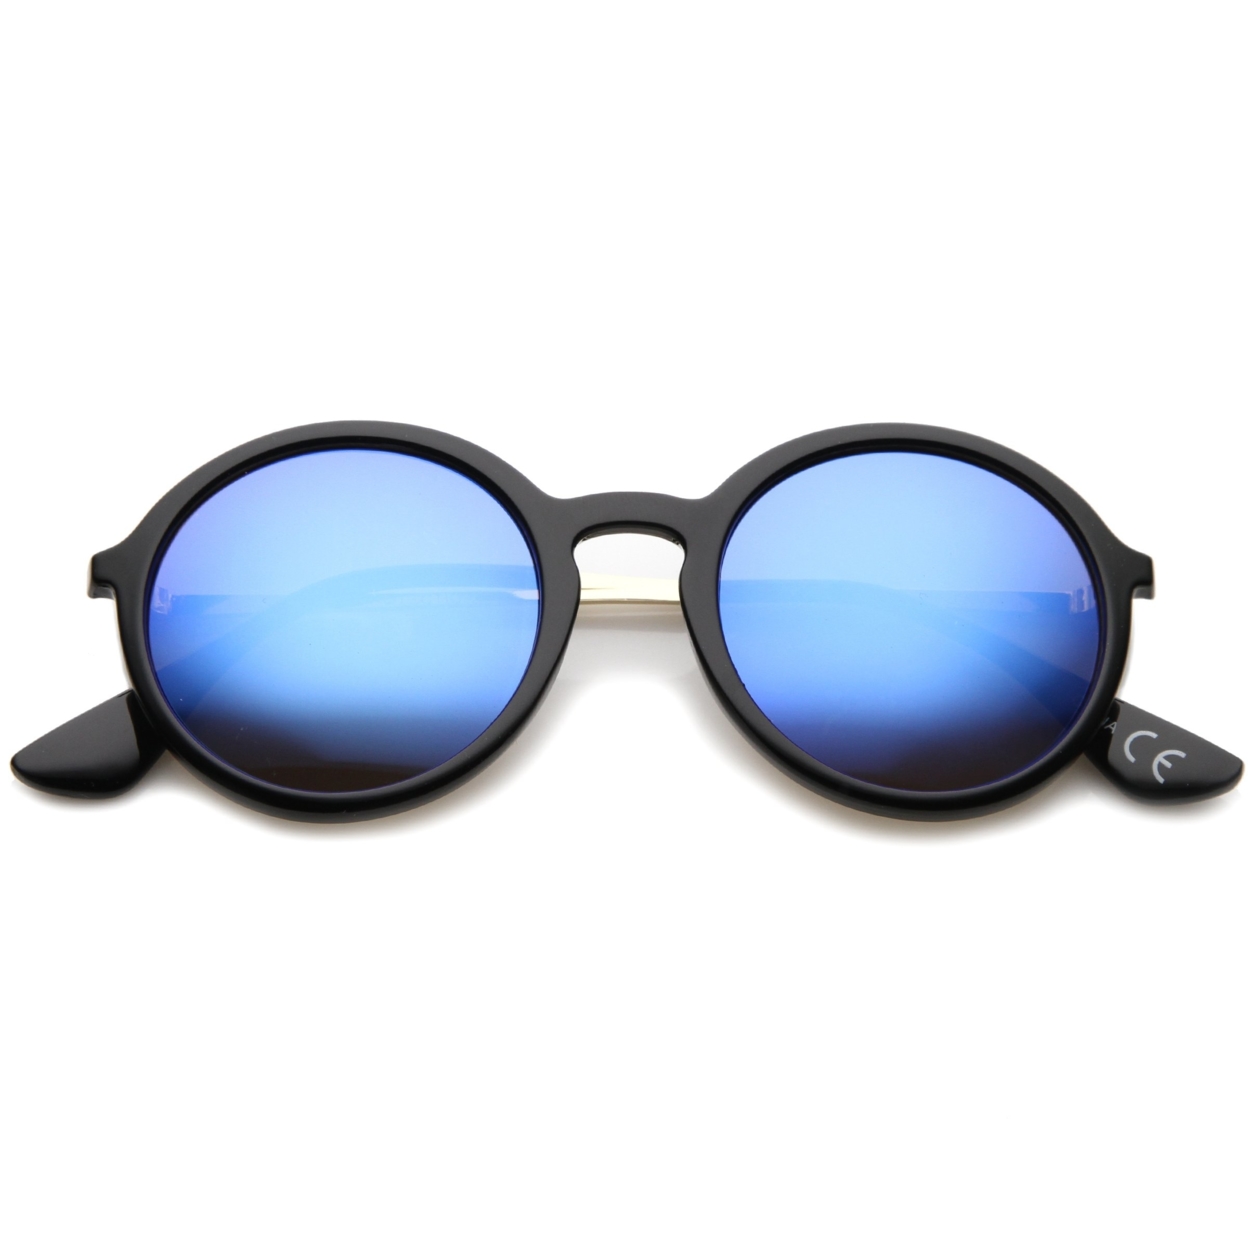 Mid Sized Modern Metal Temple Mirror Lens Round Sunglasses 49mm - Tortoise / Green Blue Mirror